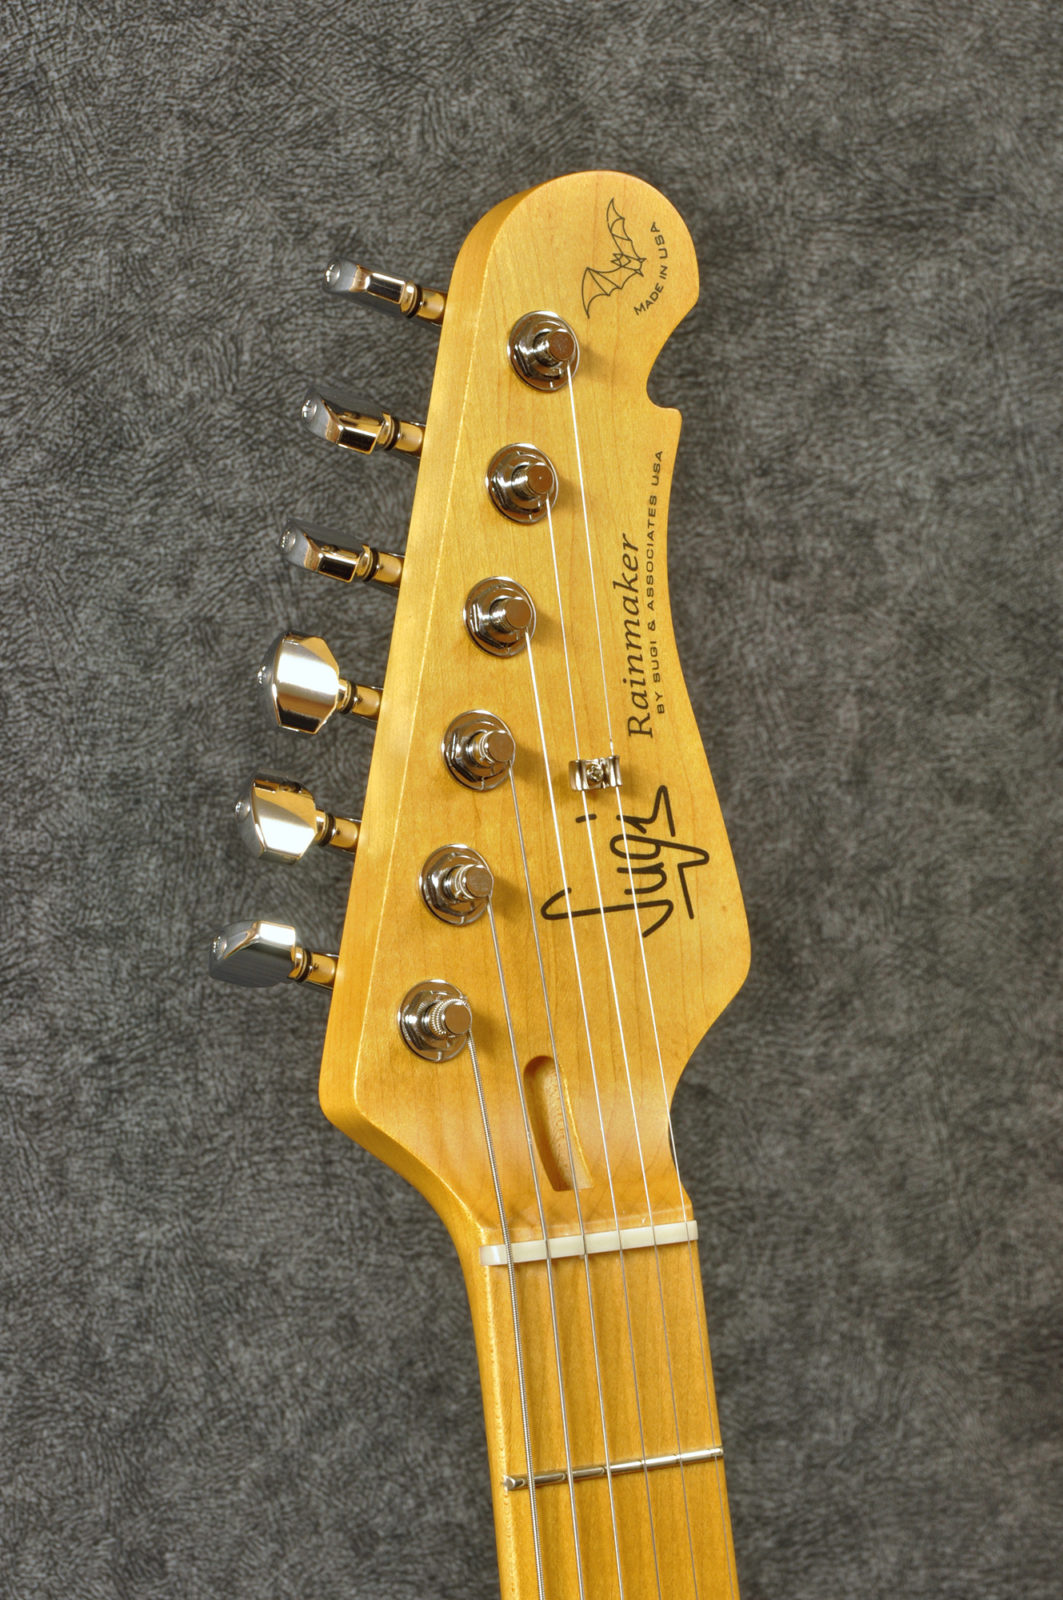 RAINMAKER GUITAR (RMG) / Guitars : Made in the USA - Sugi Guitars 